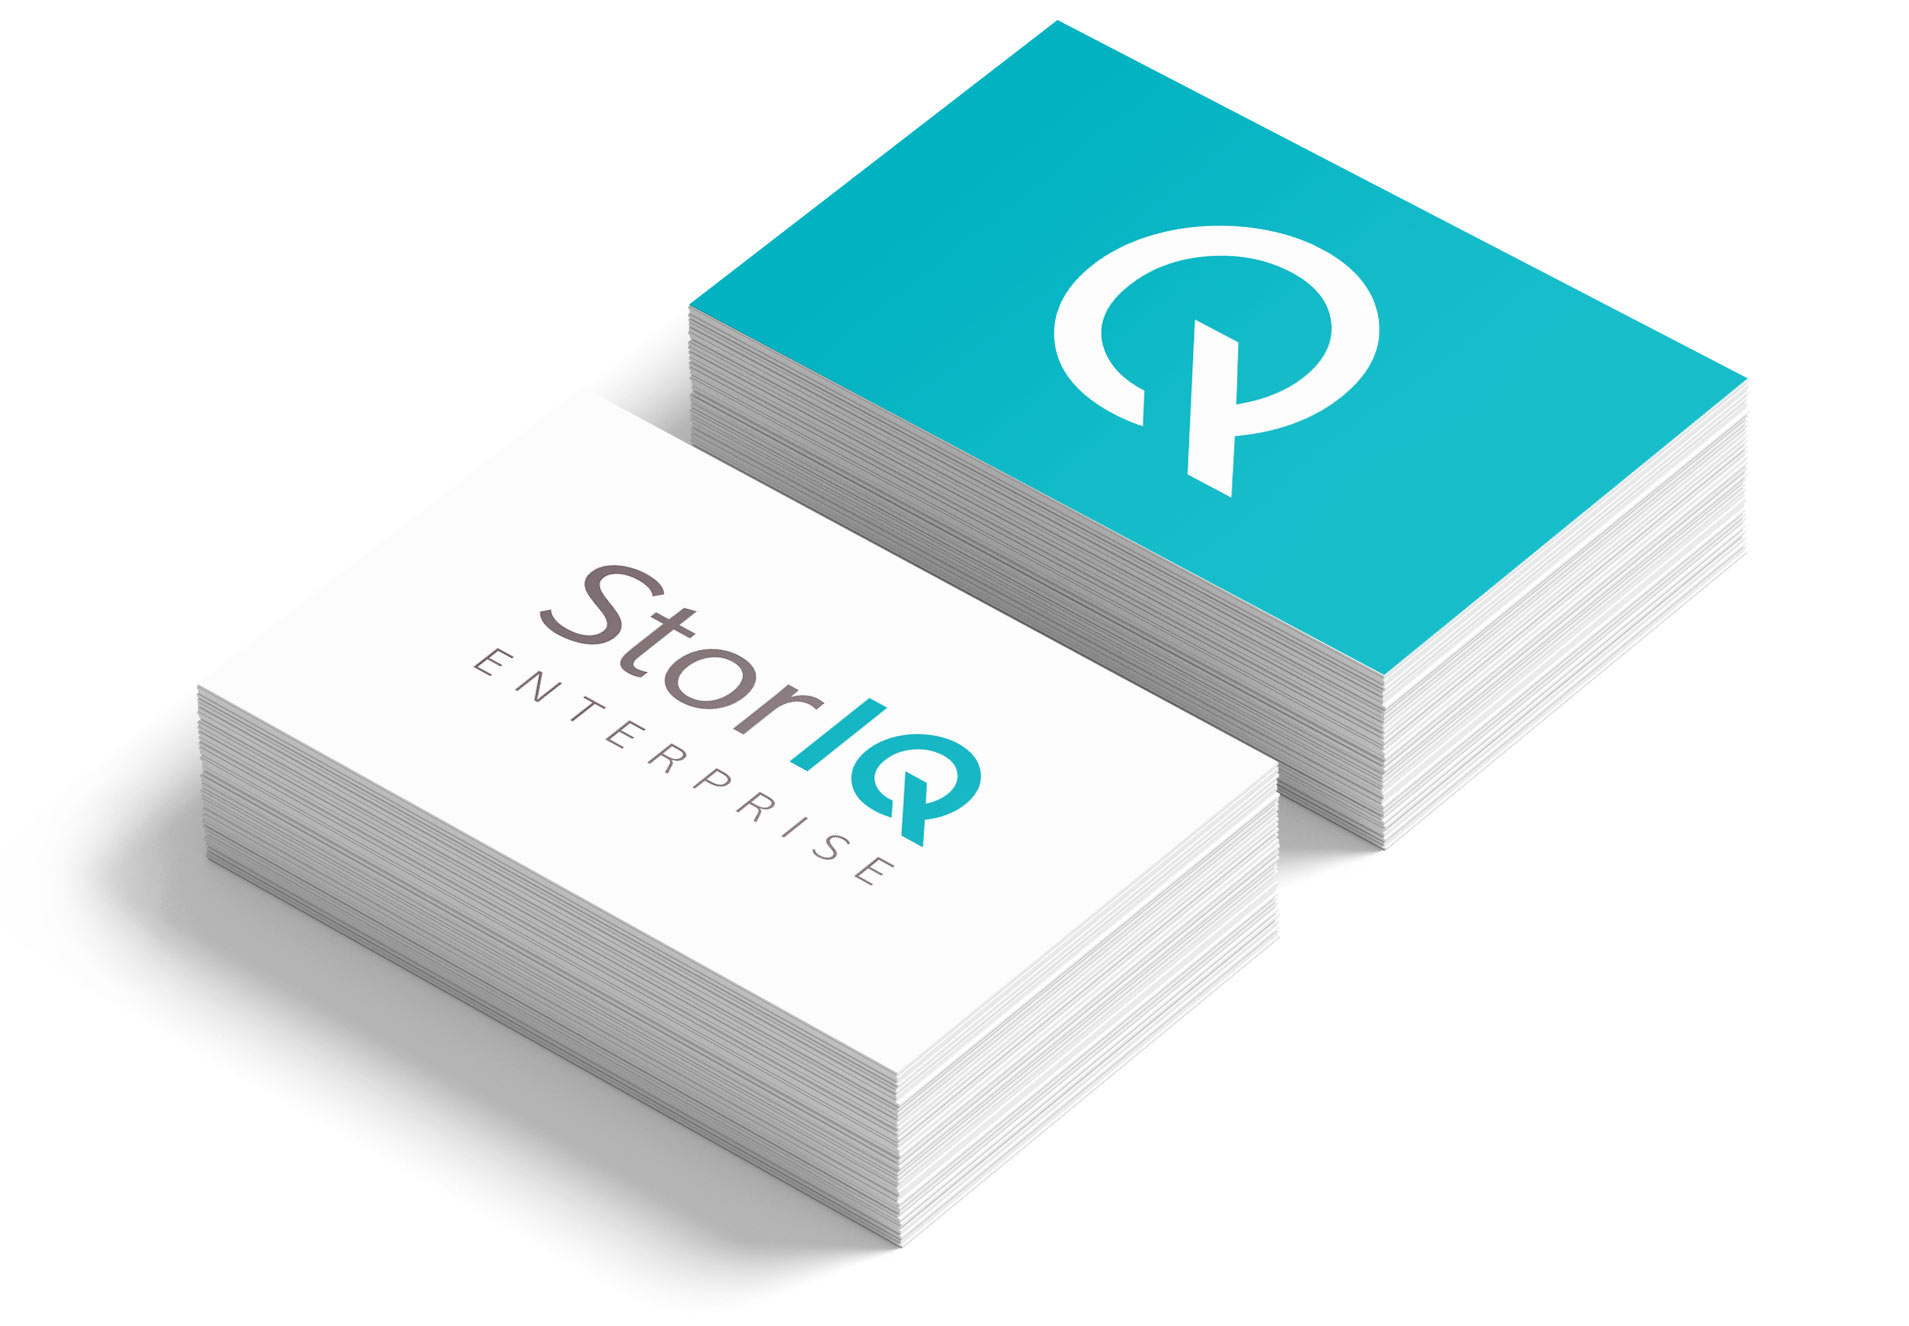 StorIQ business card design